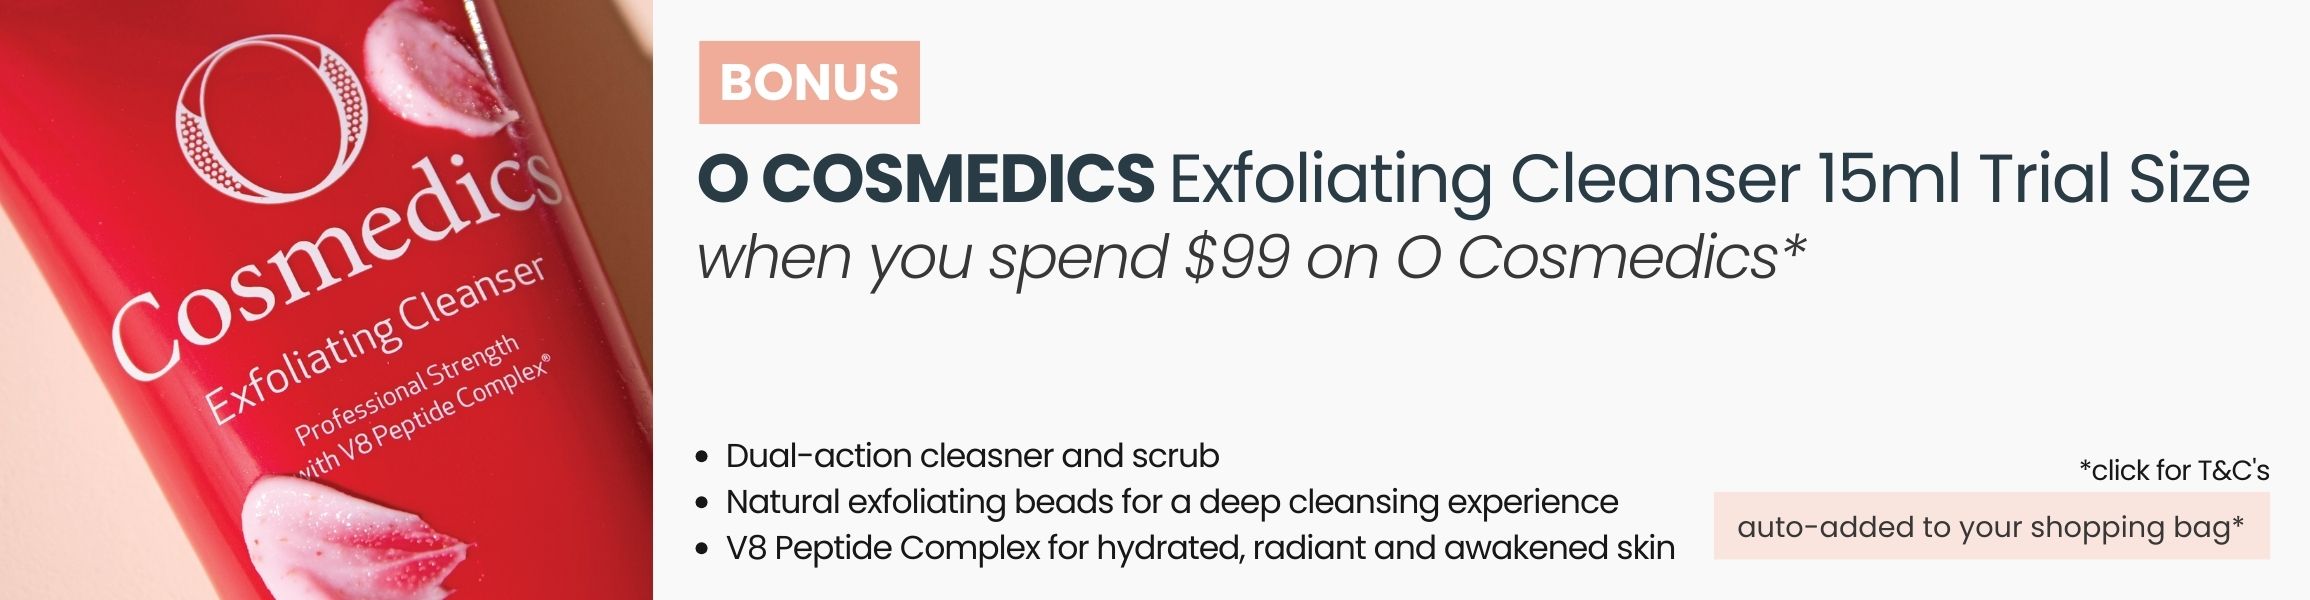 BONUS O Cosmedics Exfoliating Cleanser 15ml Trial Size. Min spend $99 on O Cosmedics. Auto-added to yoru shopping Bag.